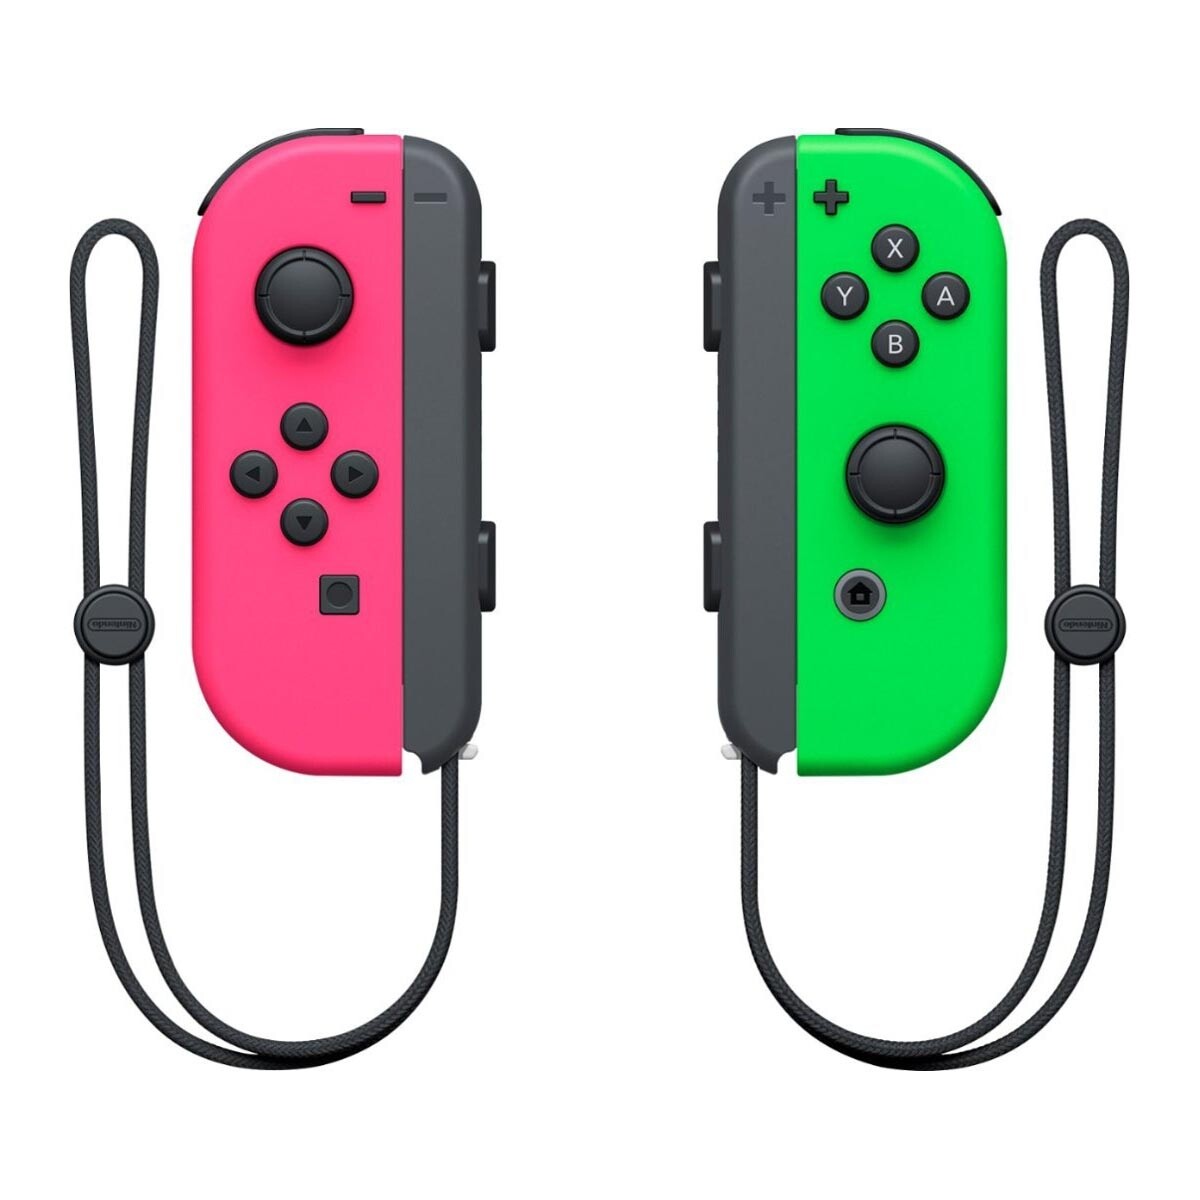 Controles Joystick JOY-CON (L) / (R) para Nintendo Switch - Neon green-pink 